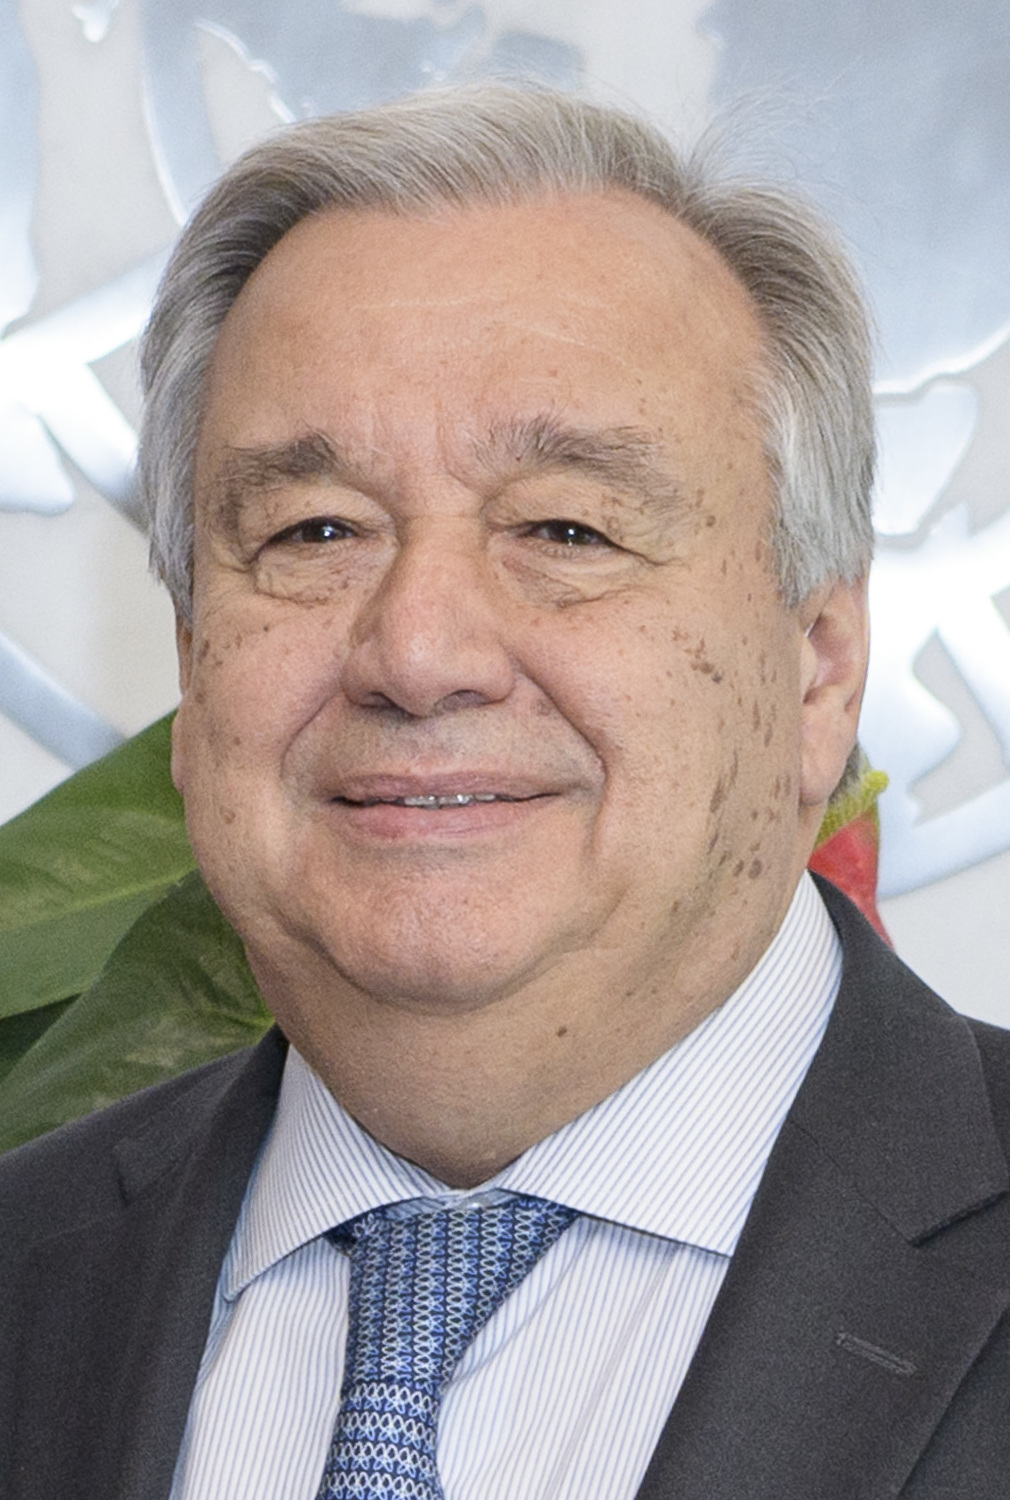 Antonio Guterres Wikipedia